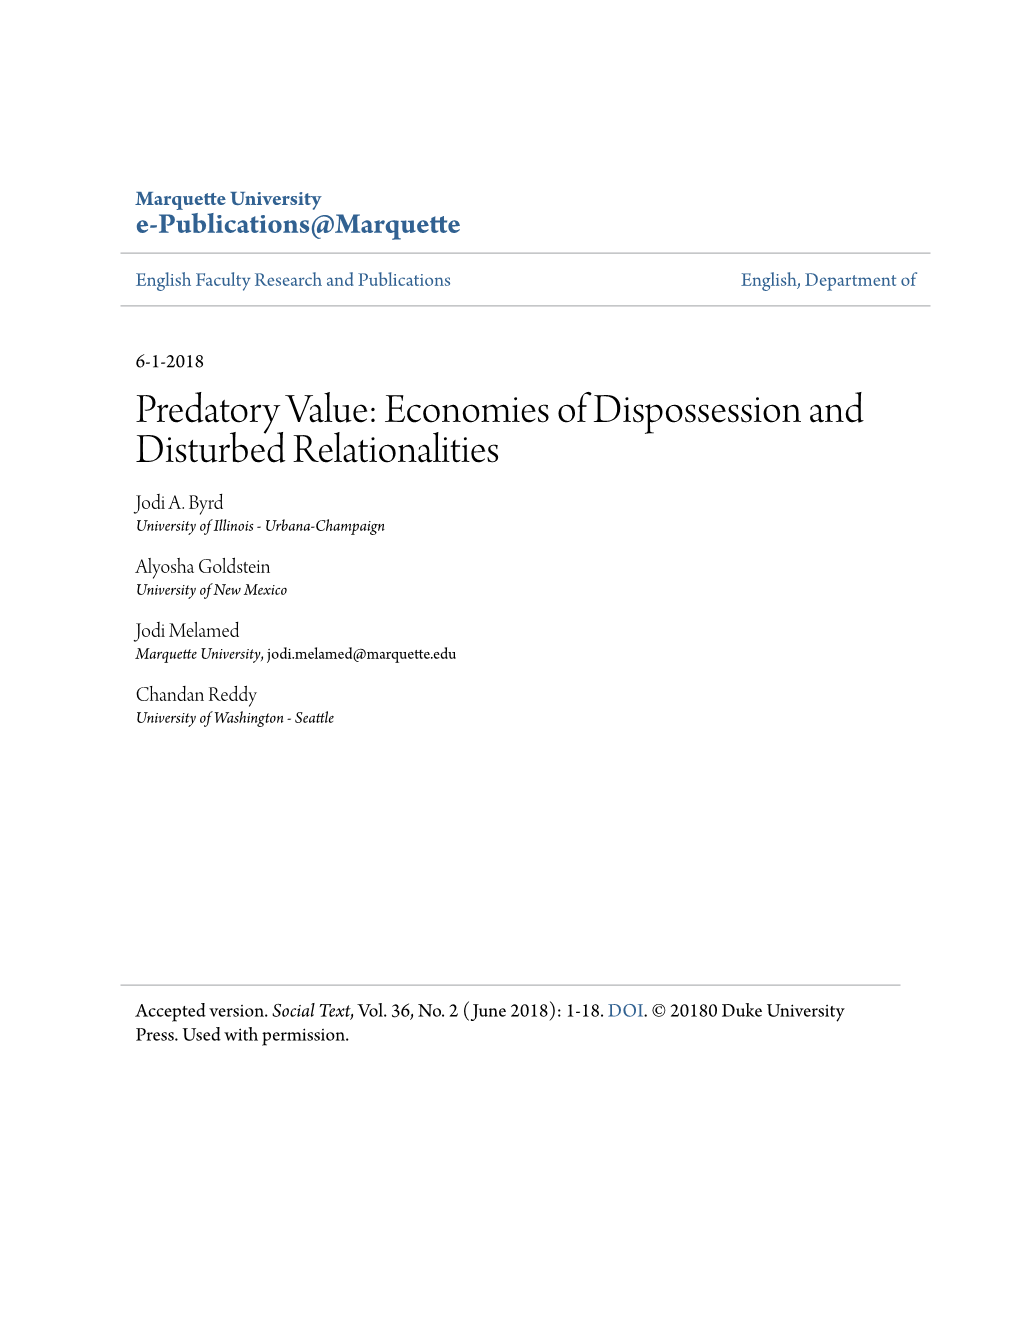 Predatory Value: Economies of Dispossession and Disturbed Relationalities Jodi A